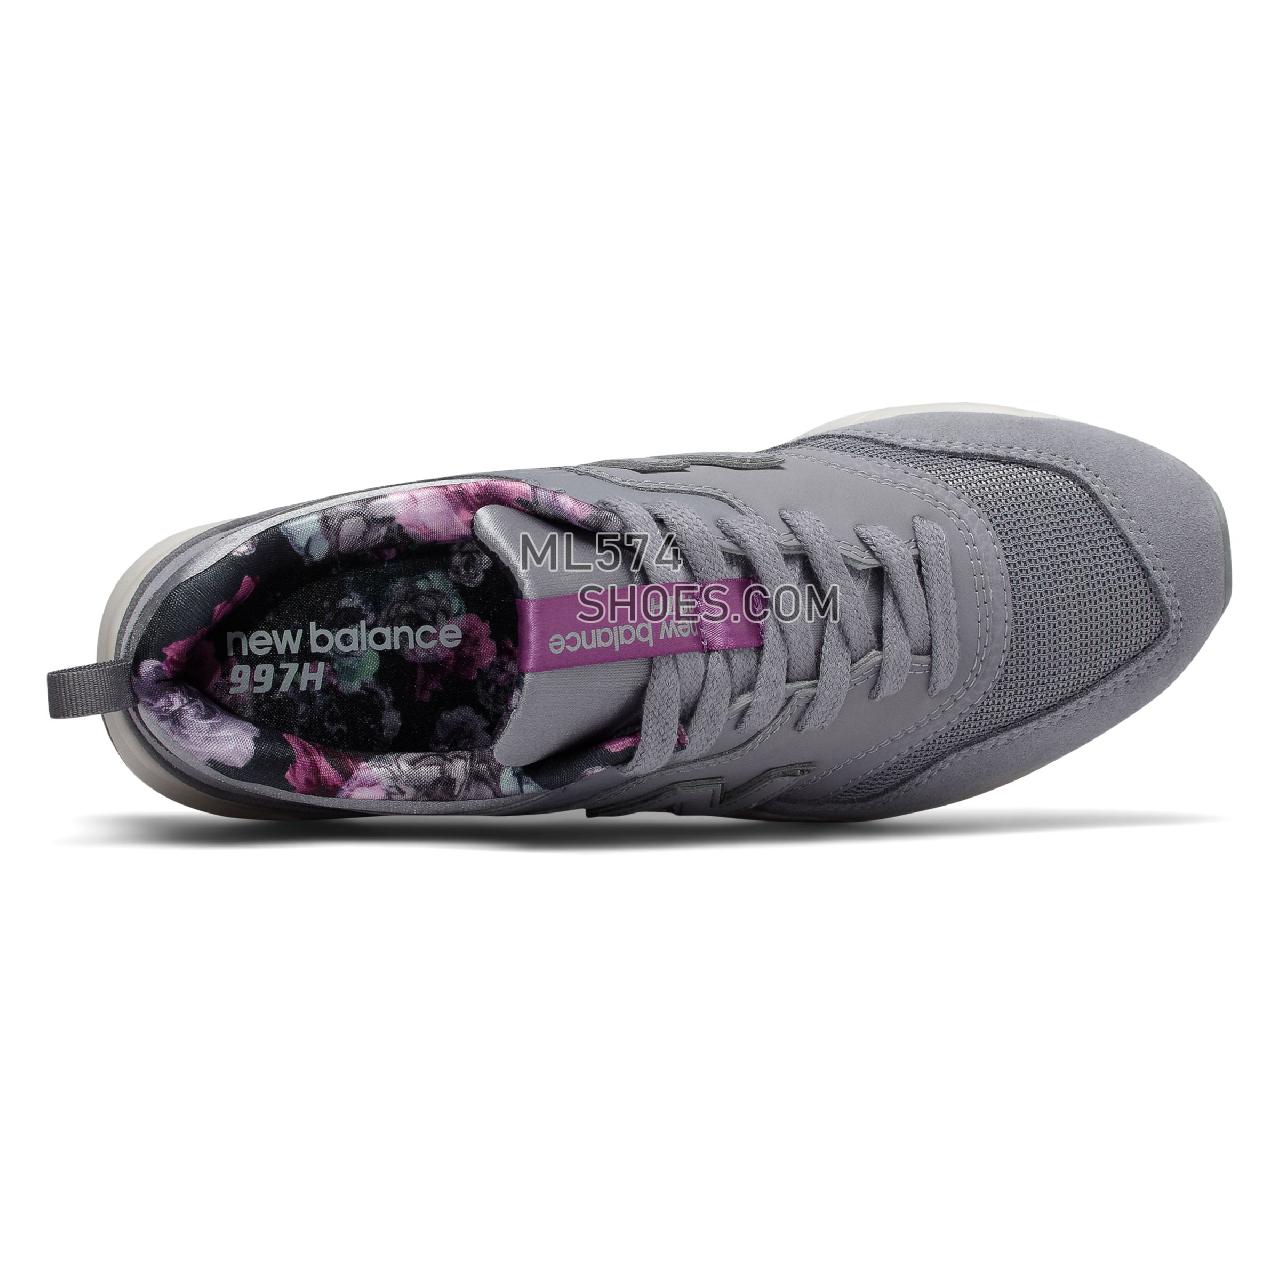 New Balance 997H - Women's Classic Sneakers - Smokey Quartz with Kite Purple - CW997HXA